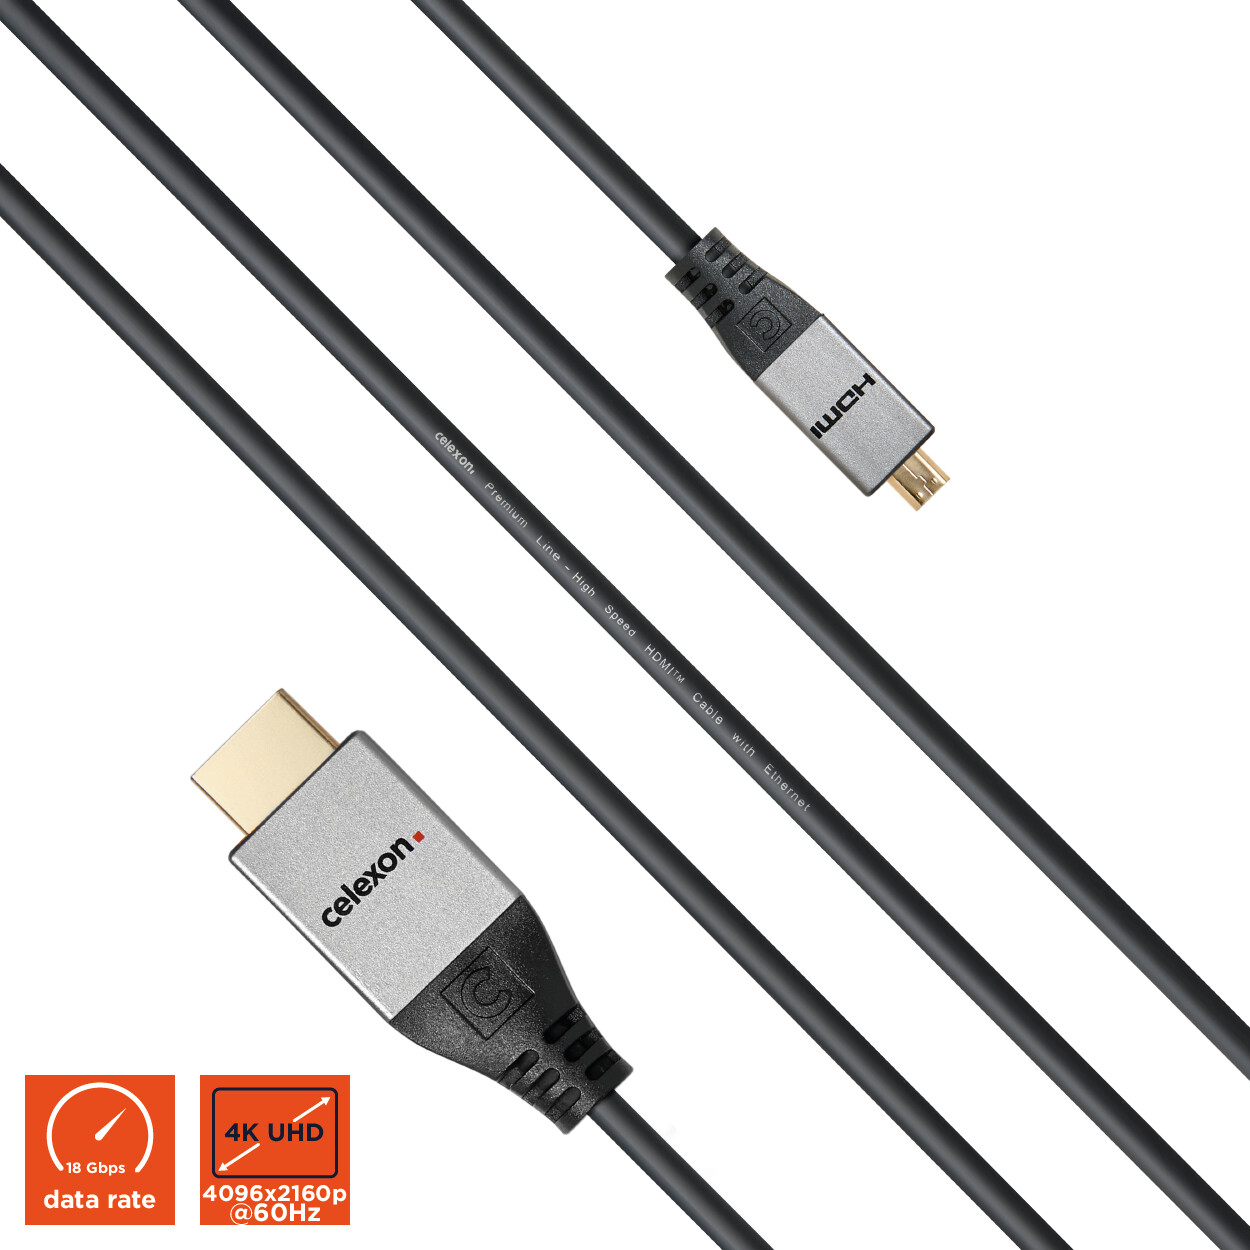 celexon-HDMI-naar-Micro-HDMI-kabel-met-Ethernet-2-0a-b-4K-3-0m-Professional